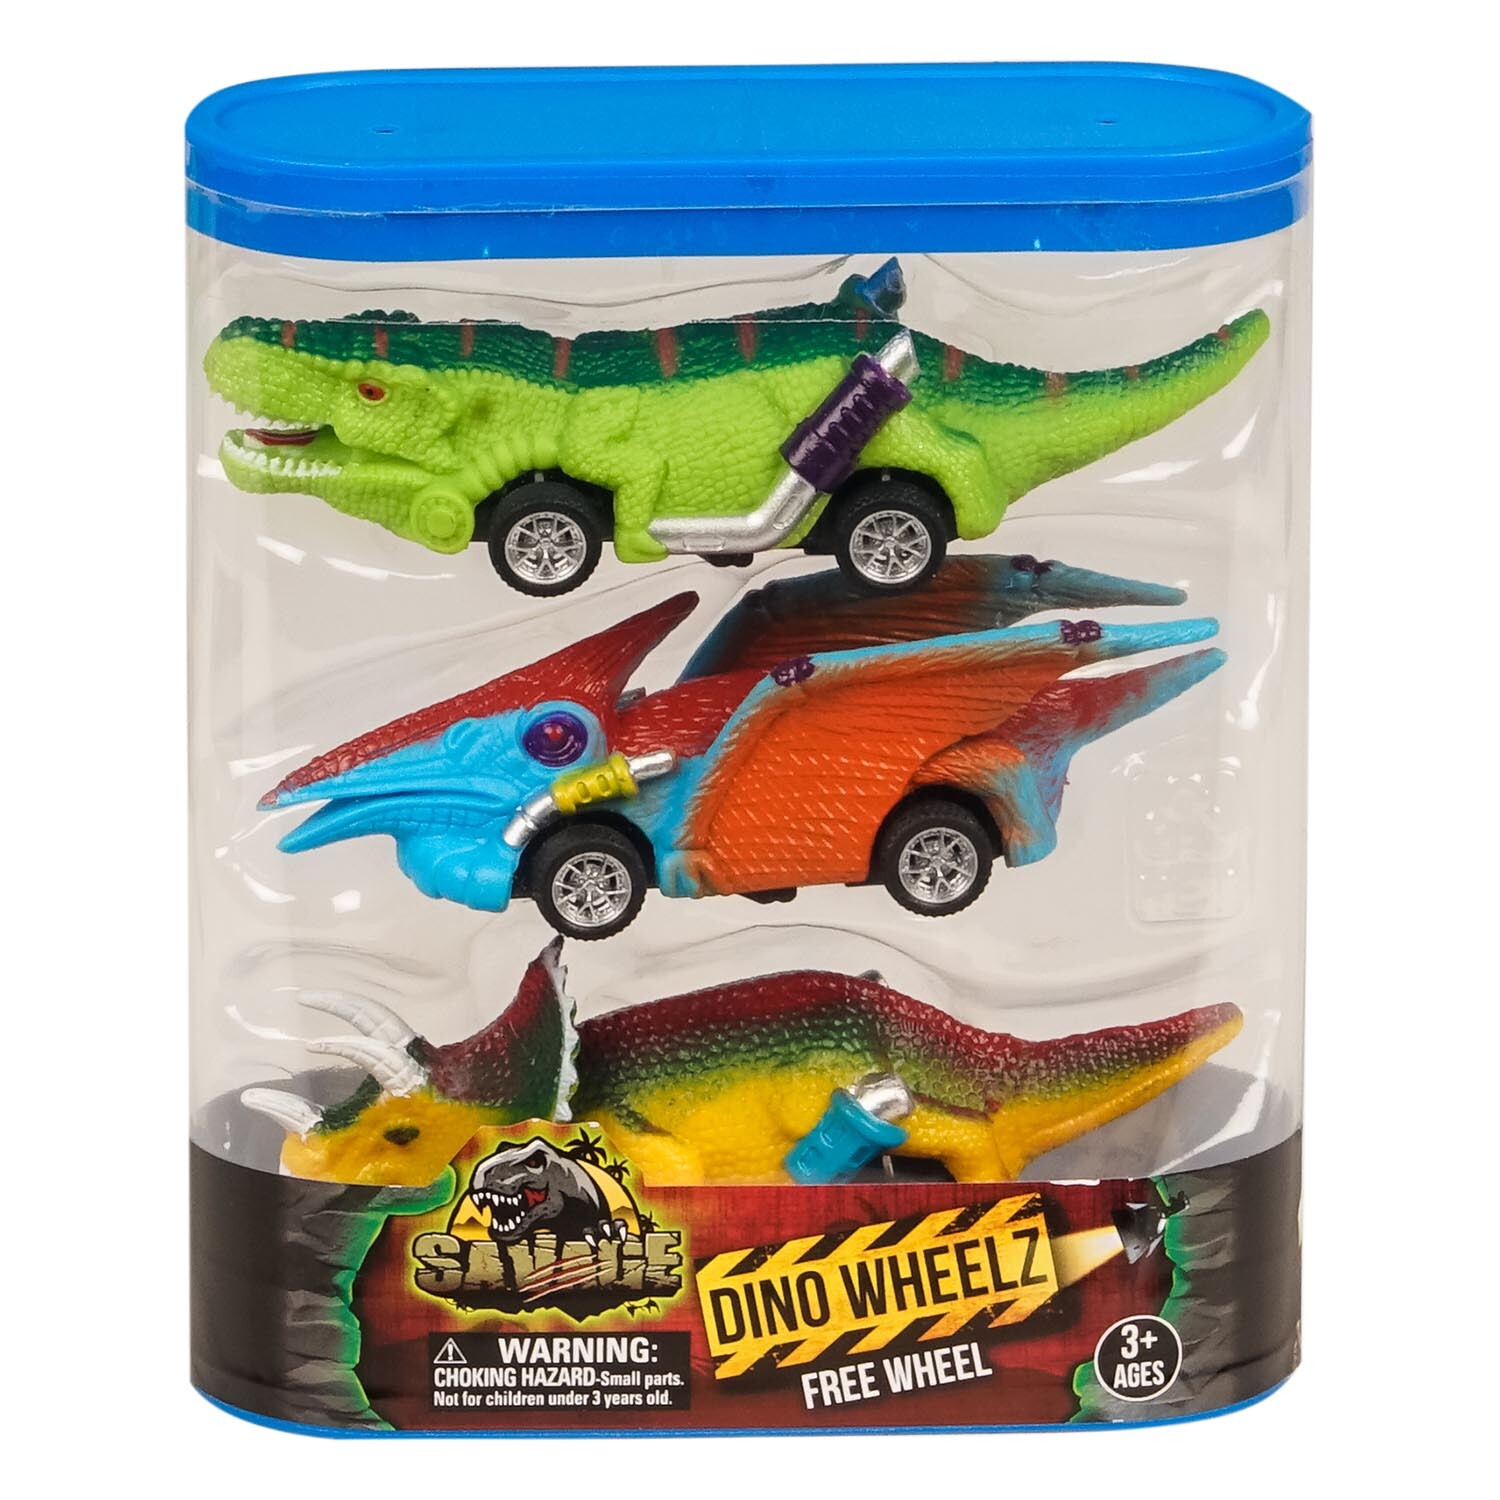 Dino Wheelz Vehicles Toy 3 Pack Image 1